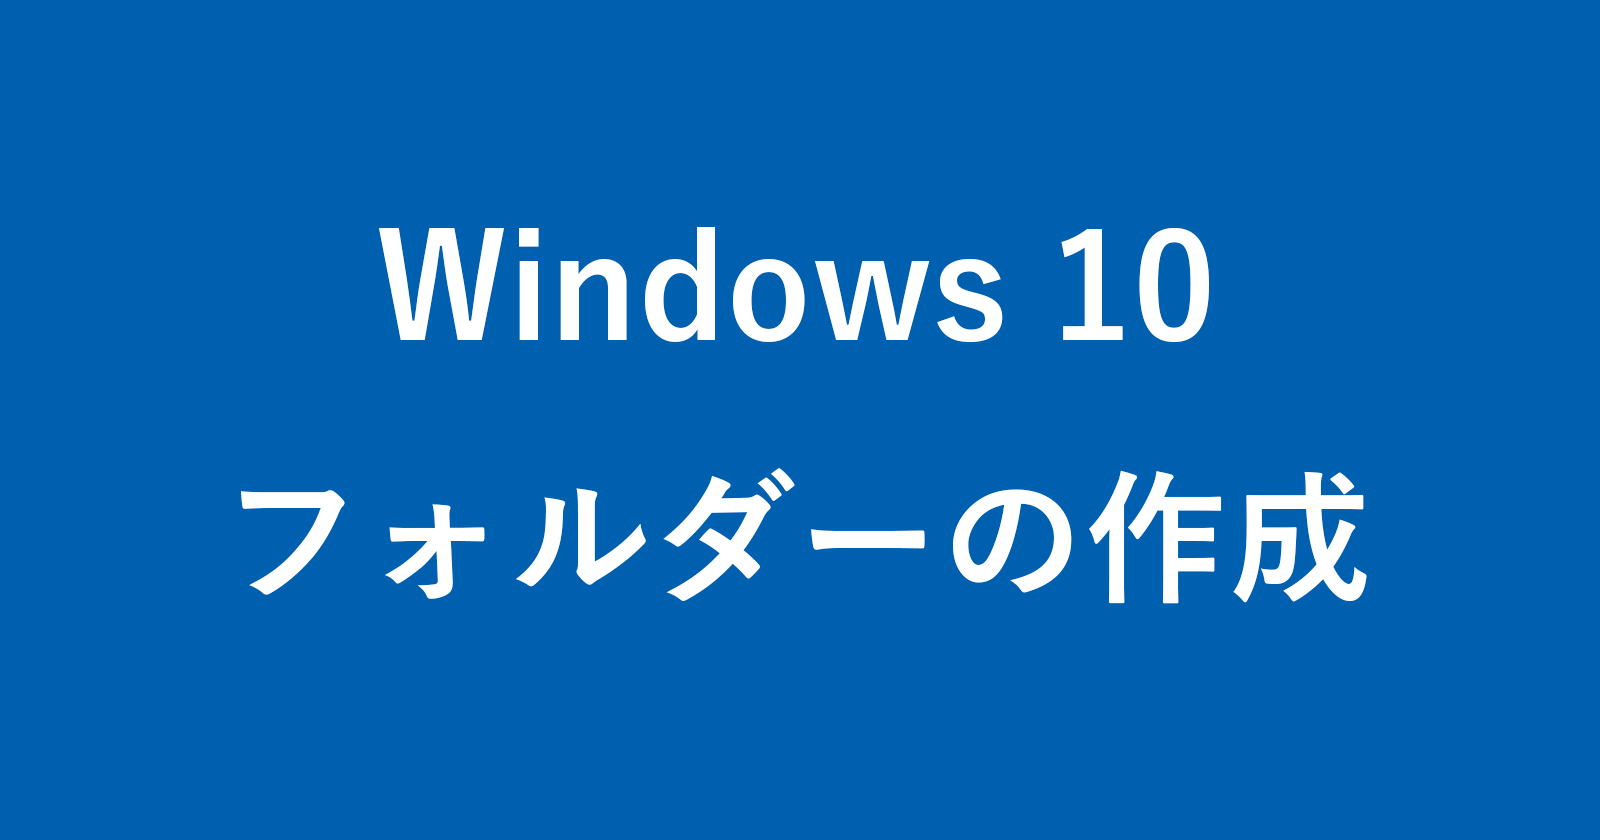 windows 10 create multiple folders